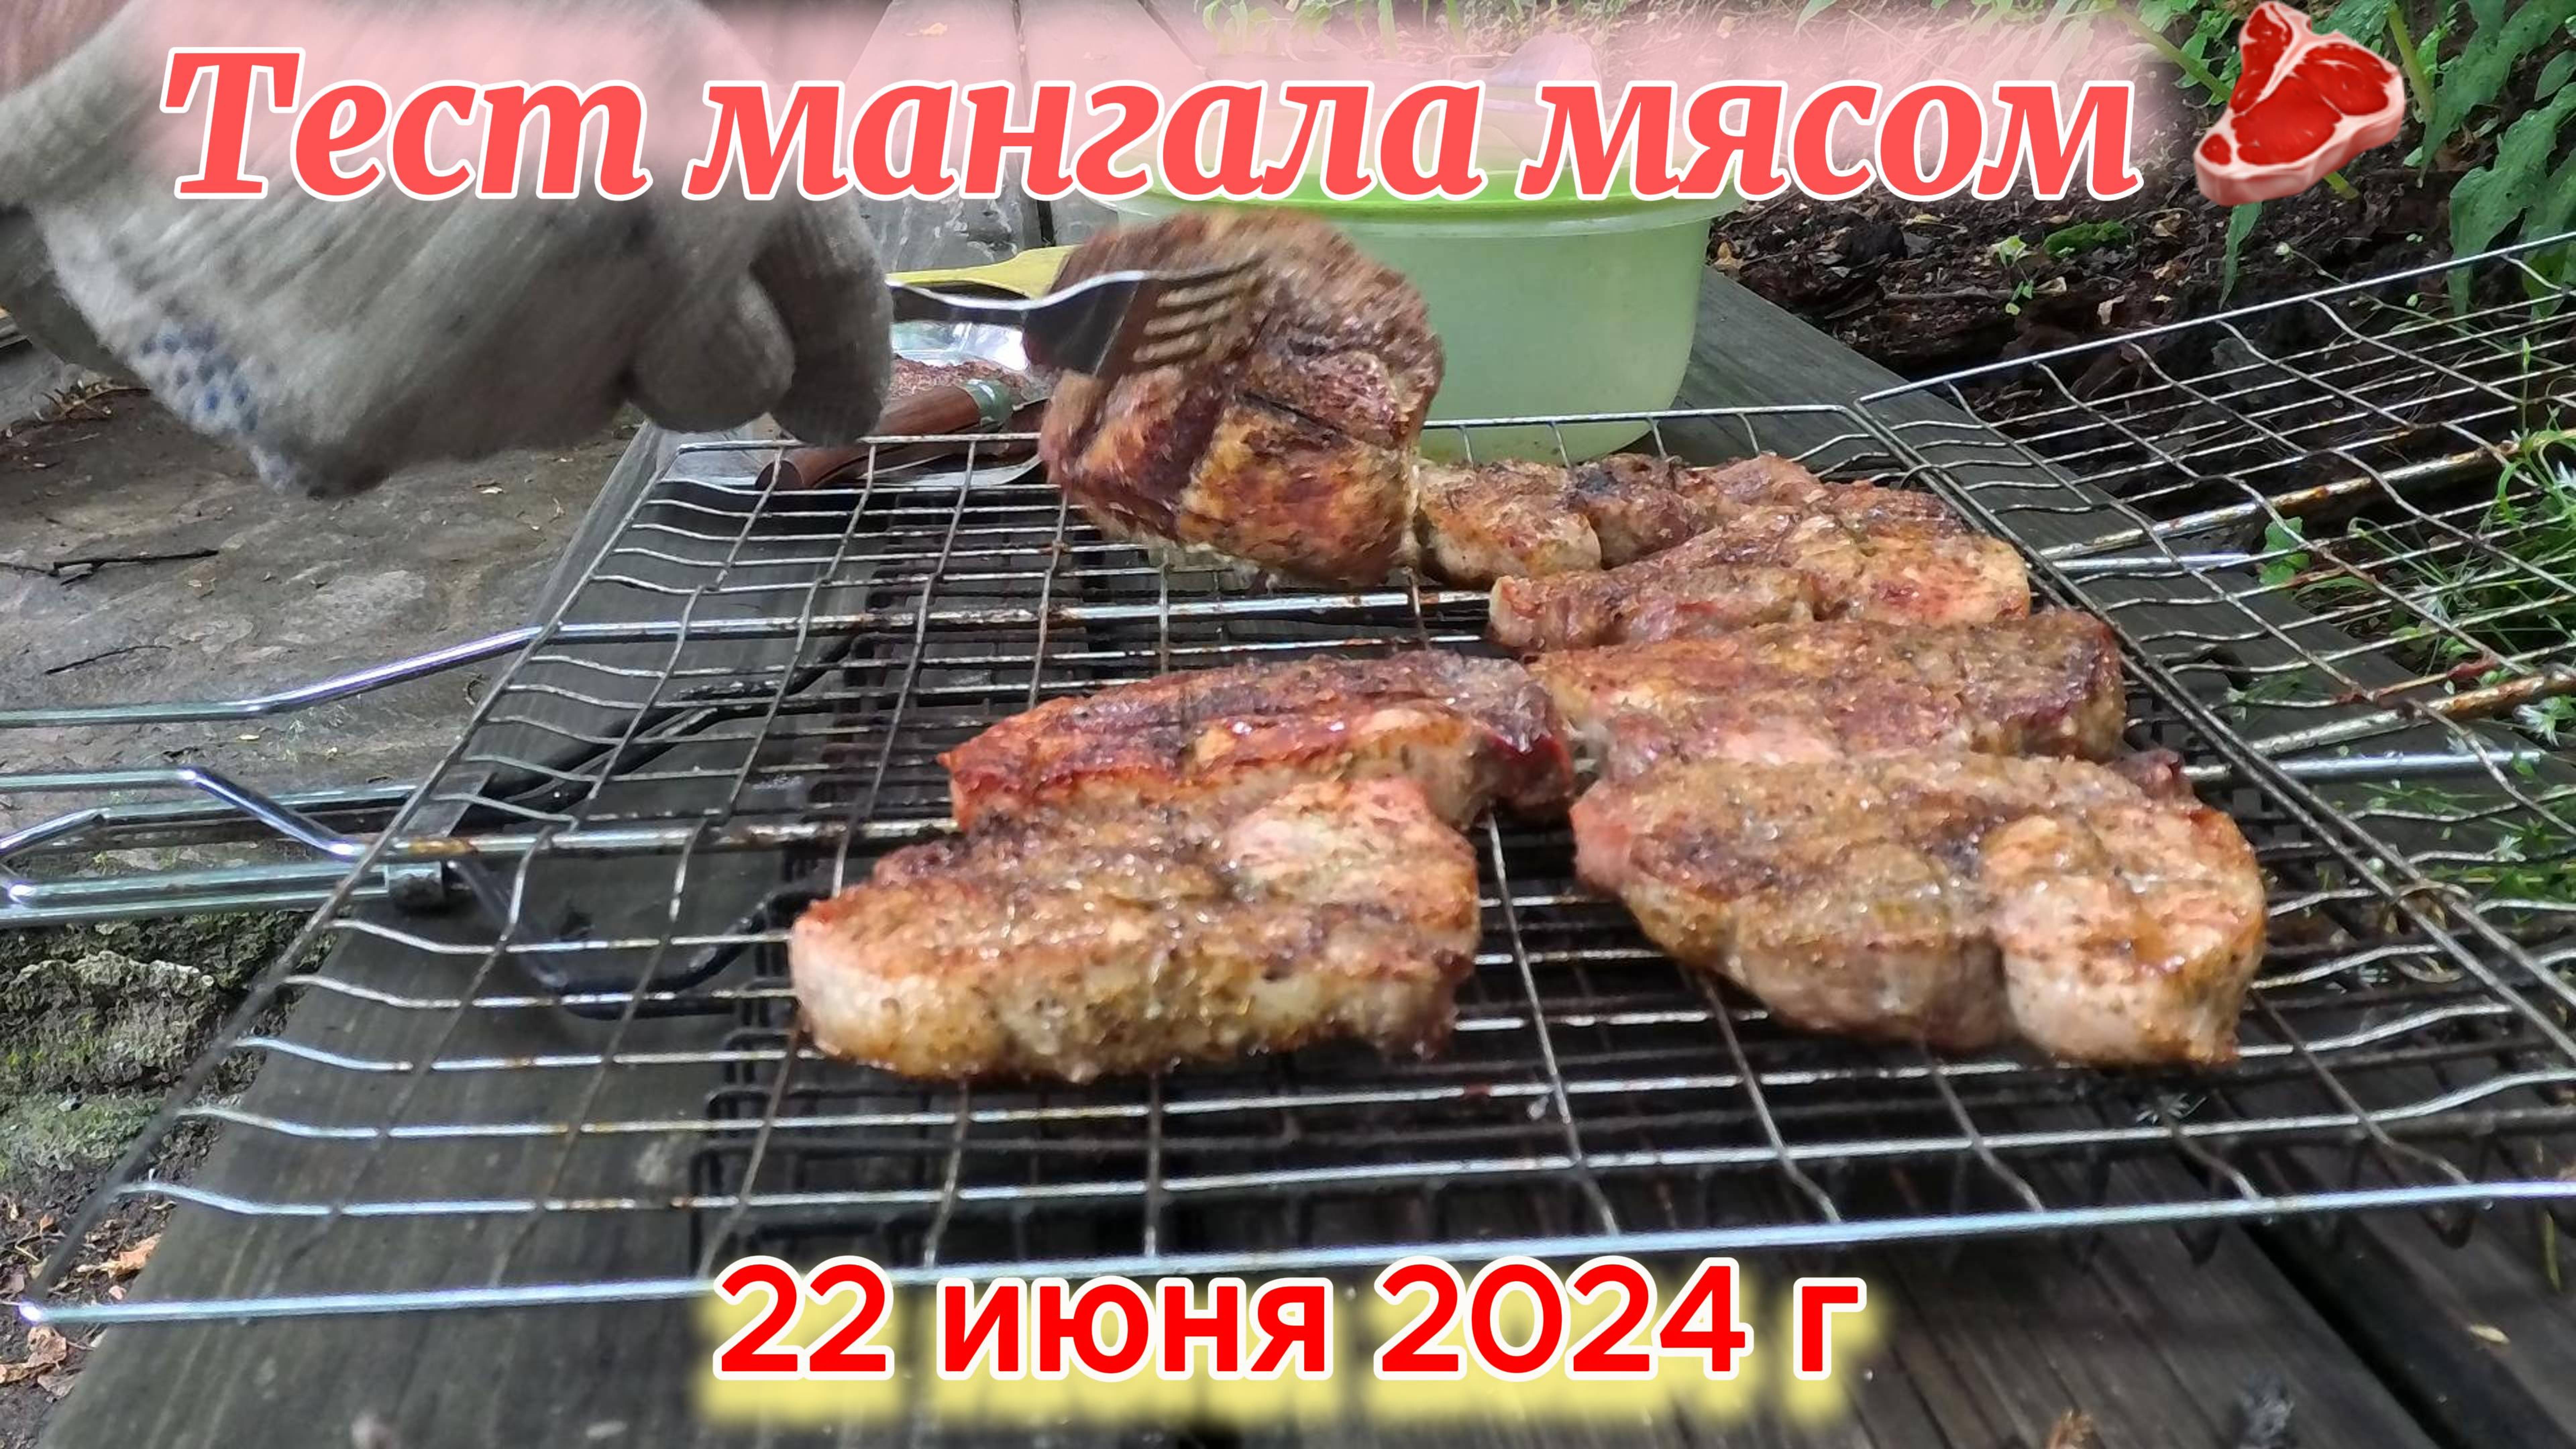 Тест мангала - готовлю мясо на огне 22 июня 2024 г